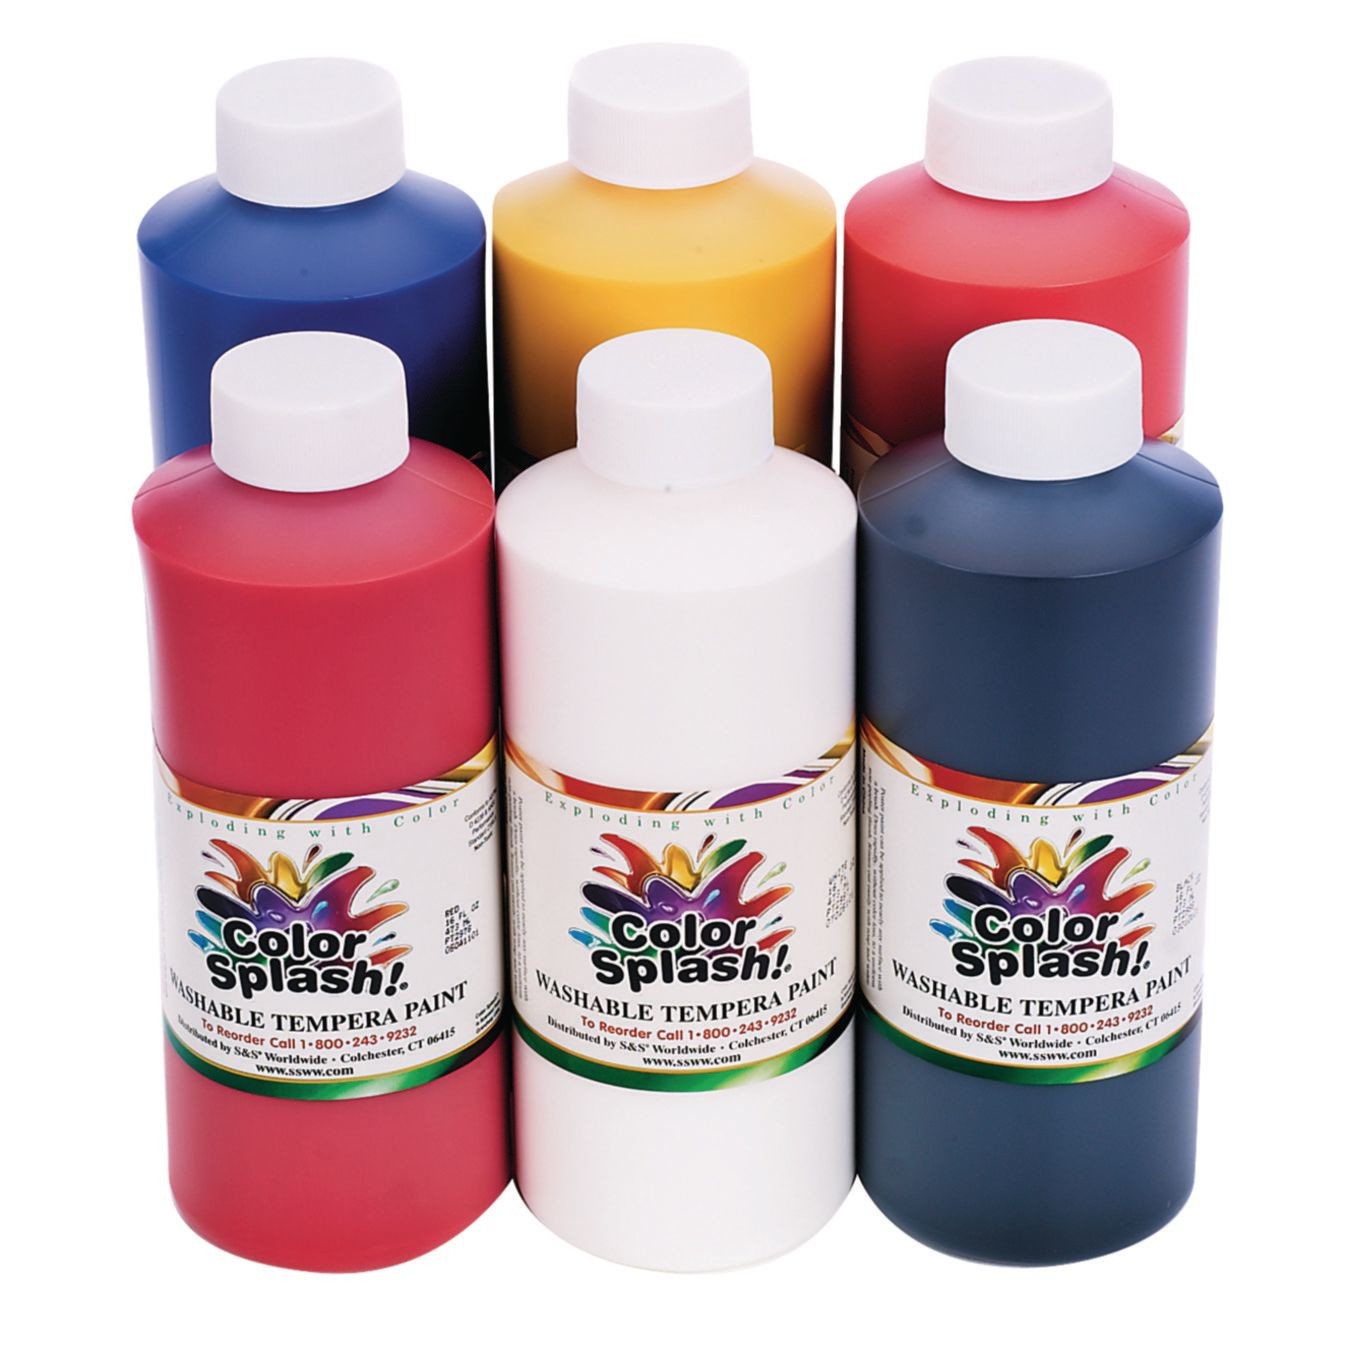 16-oz. Color Splash Washable Tempera Paint Assortment, Price/Pack of 6